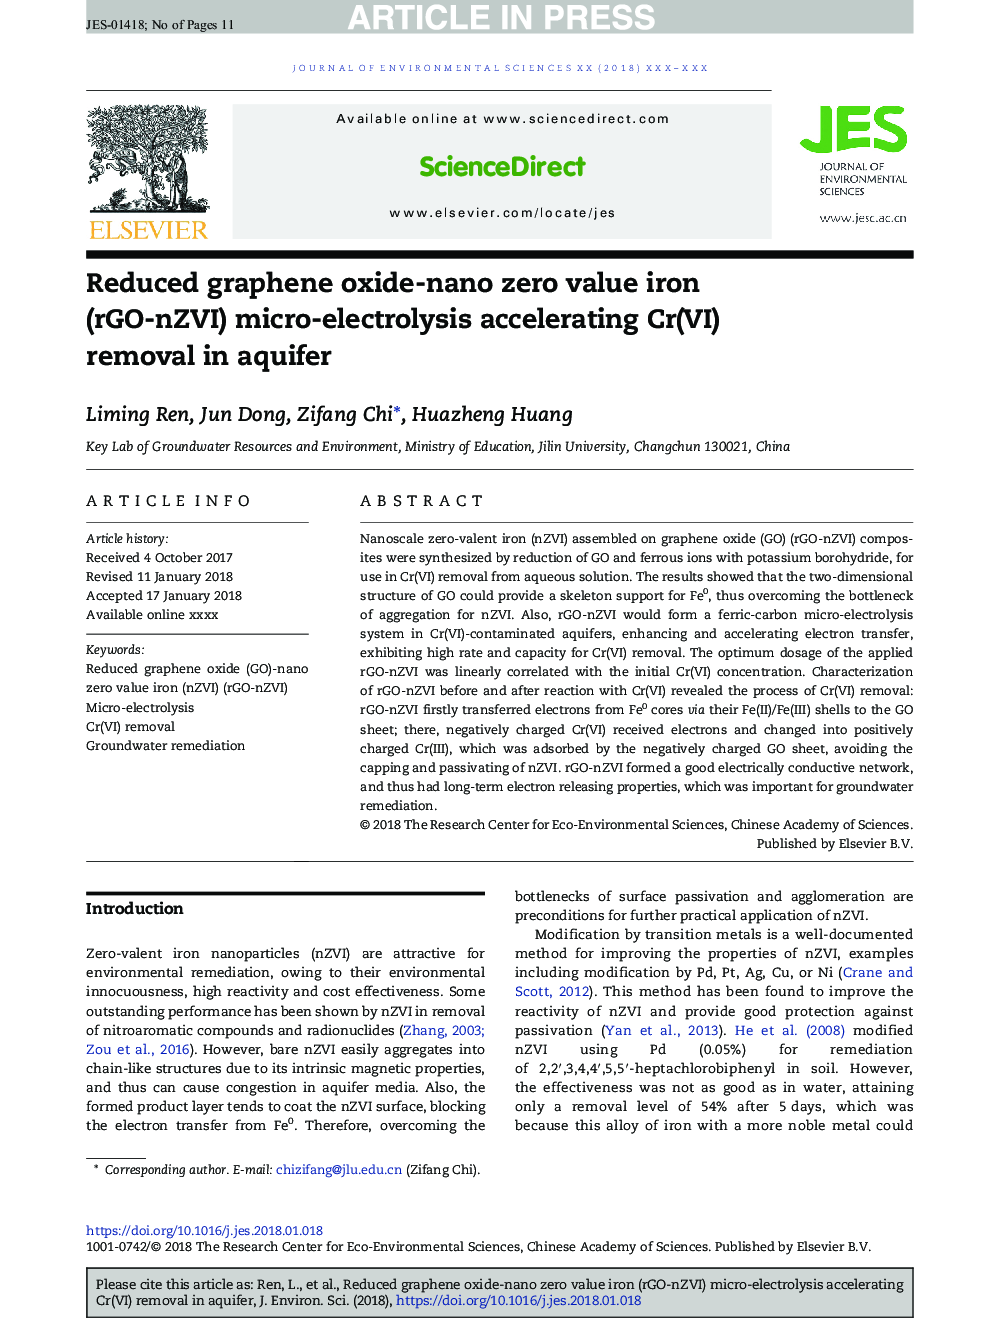 Reduced graphene oxide-nano zero value iron (rGO-nZVI) micro-electrolysis accelerating Cr(VI) removal in aquifer